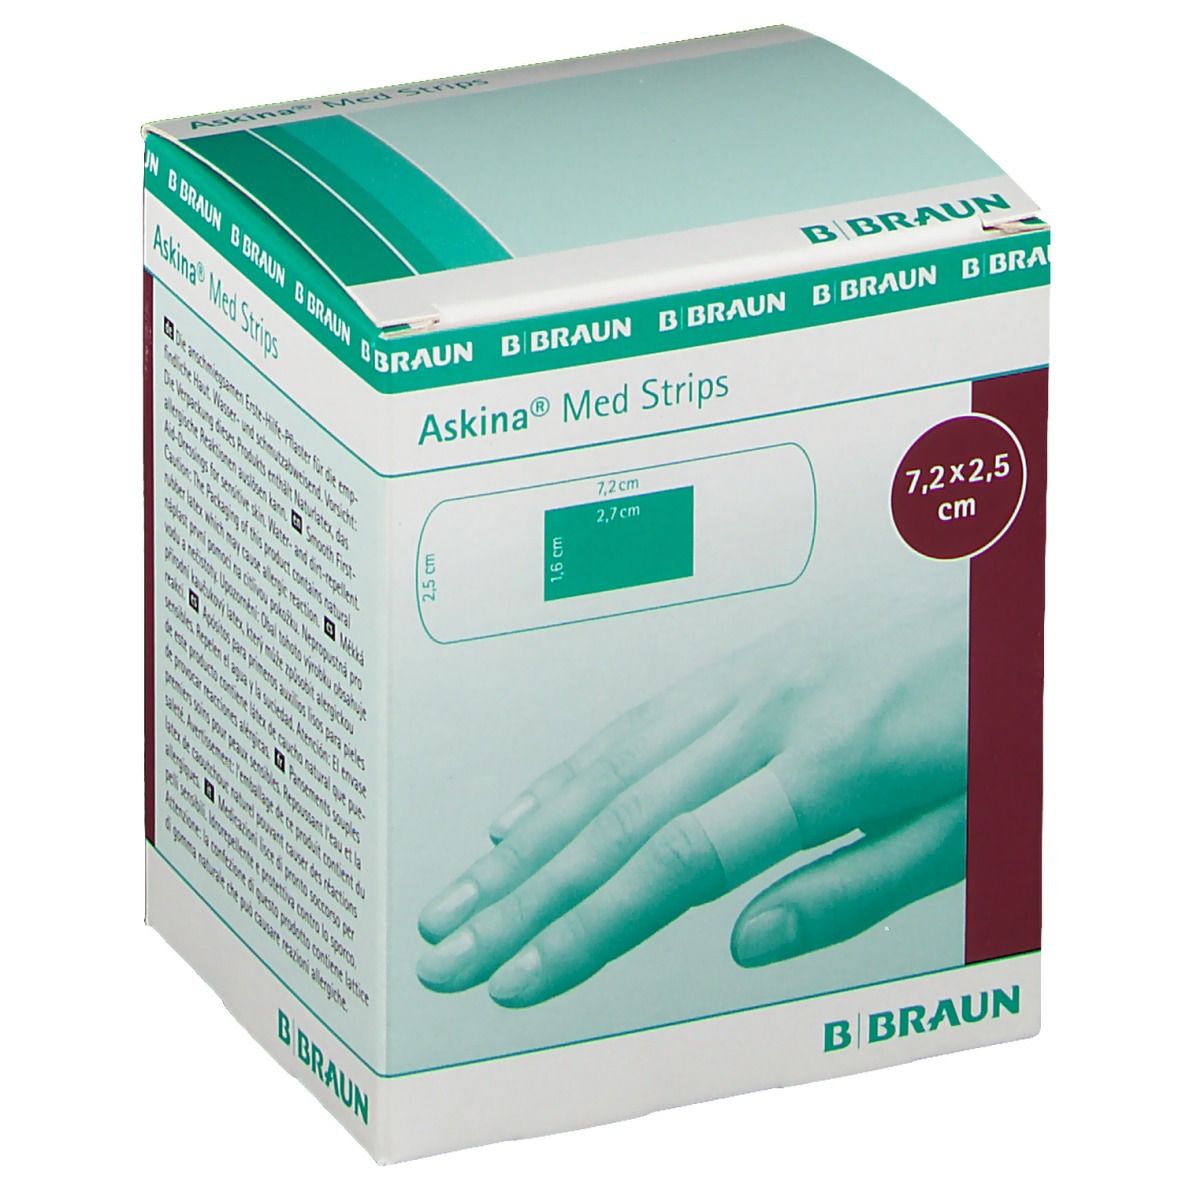 Image of Askina® Med Strips 2,5 x 7,2 cm